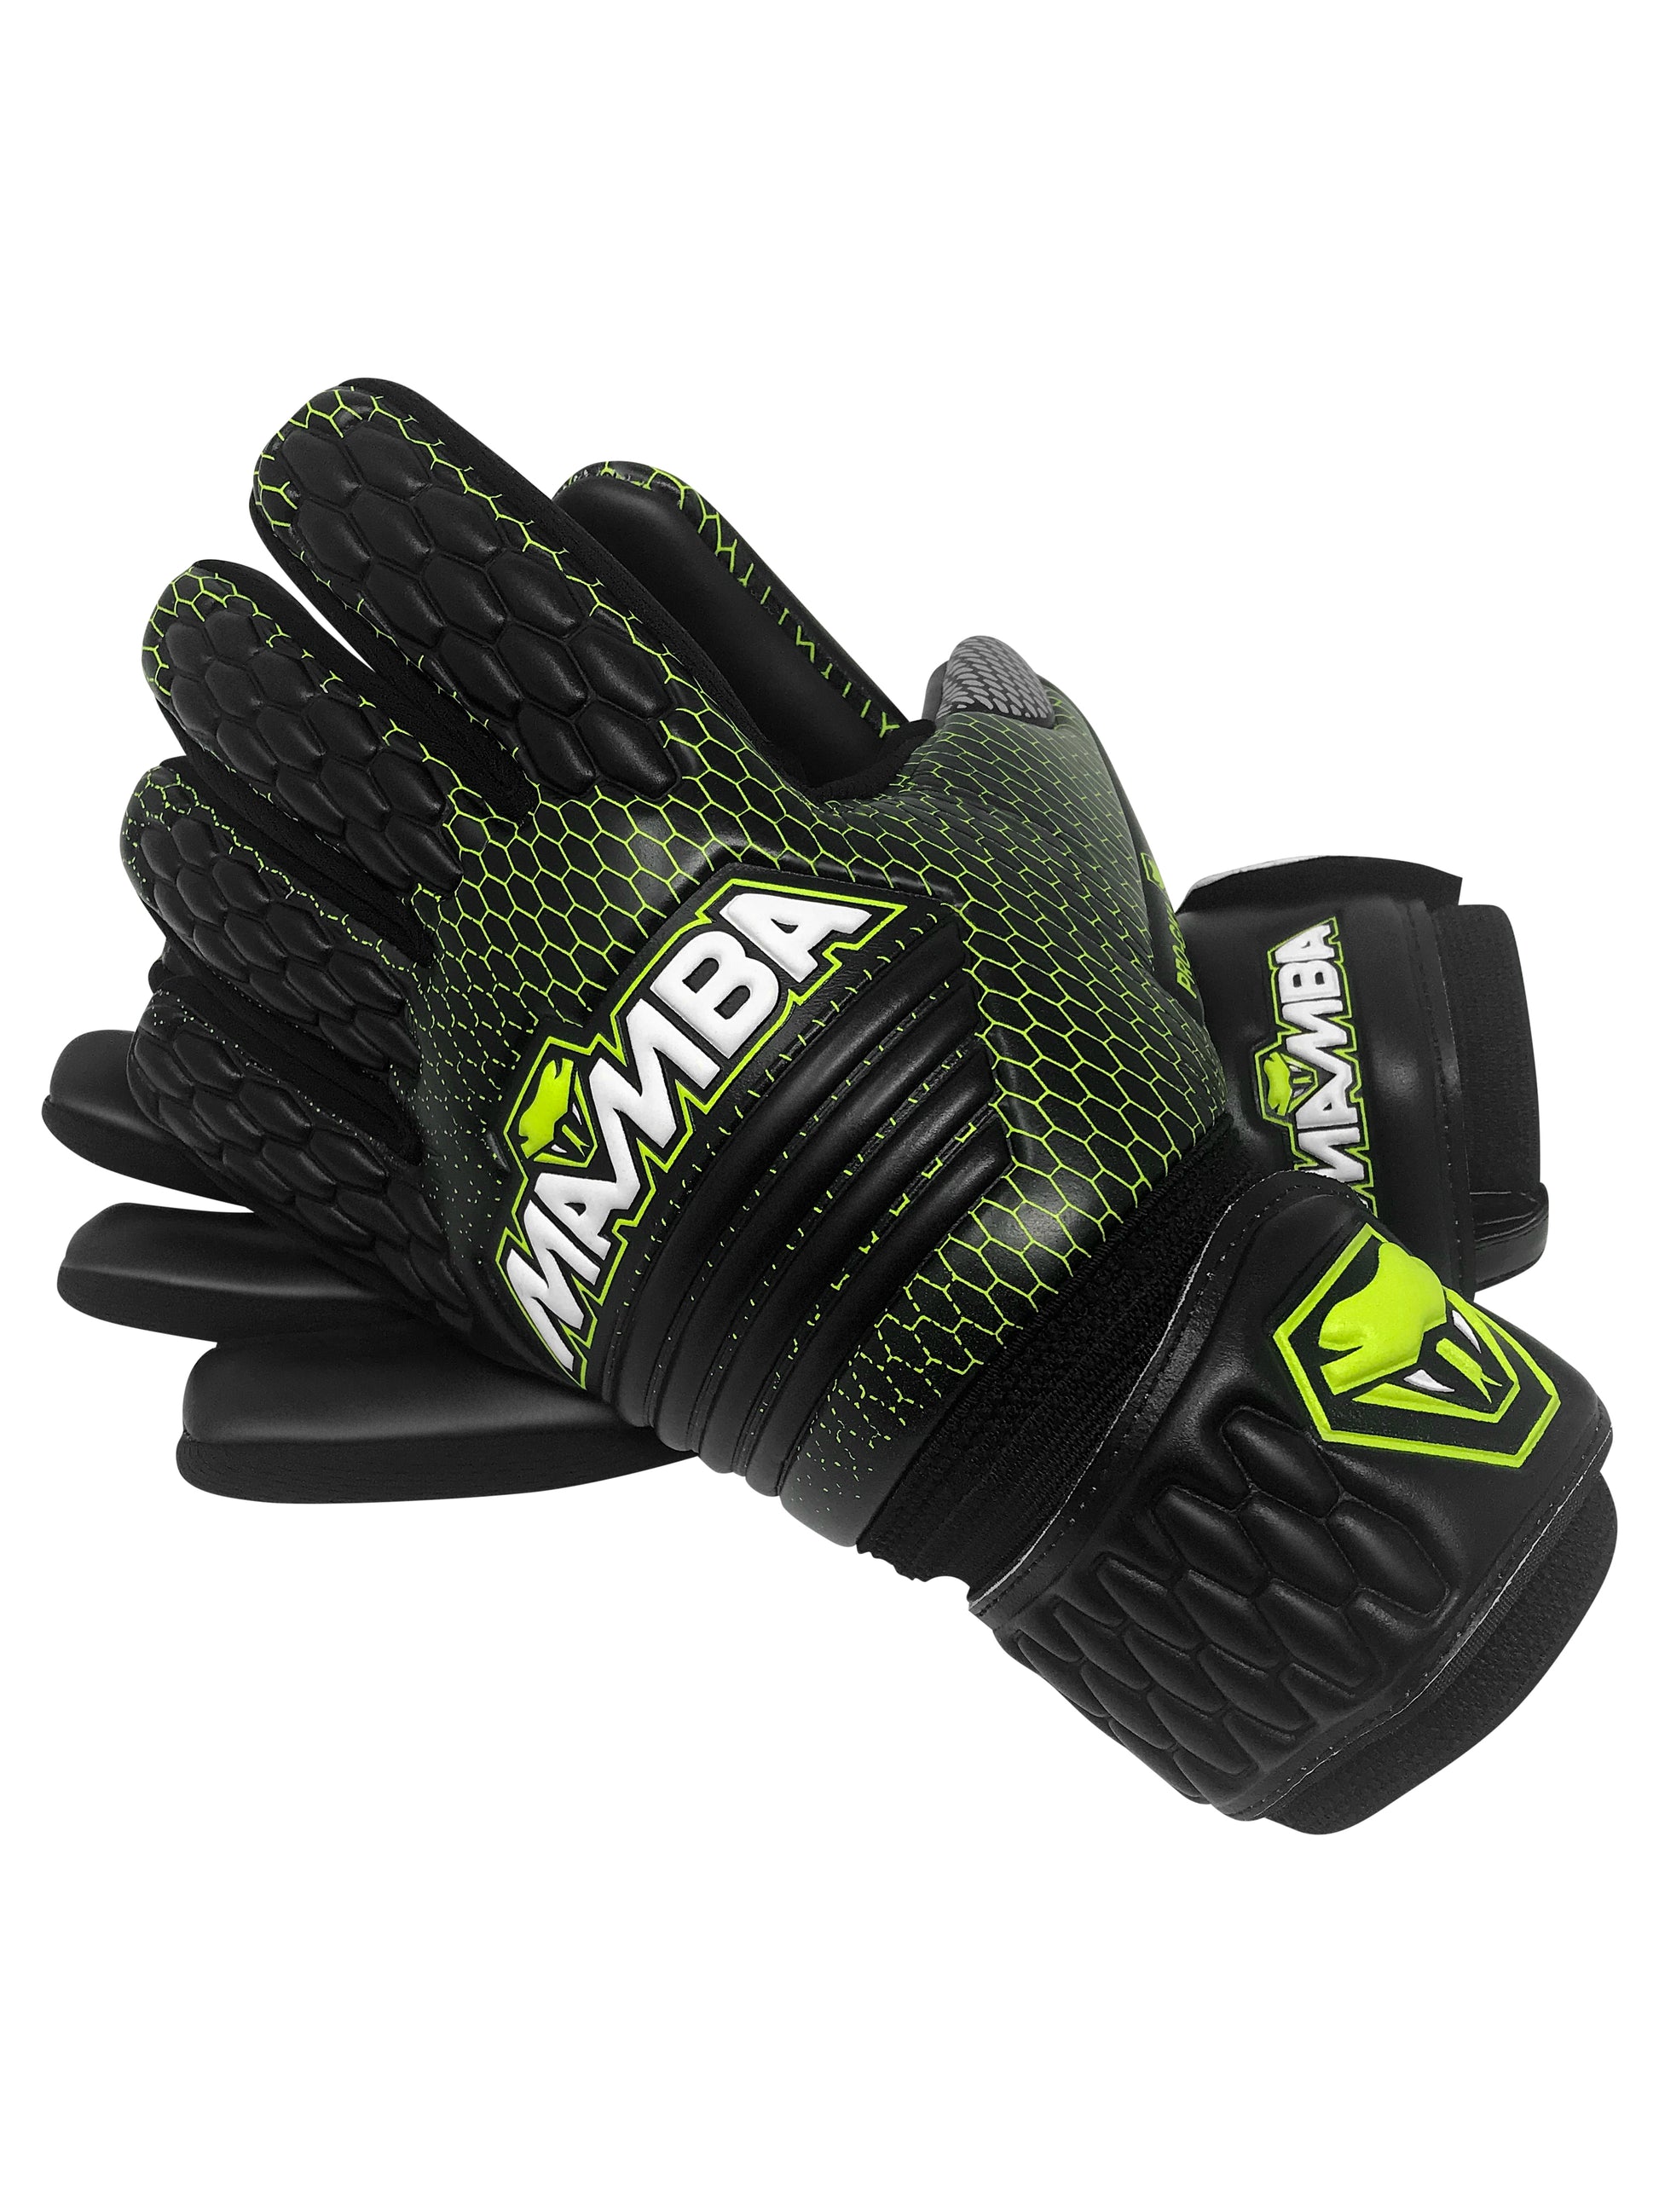 Pro Goalkeeper gloves black mamba